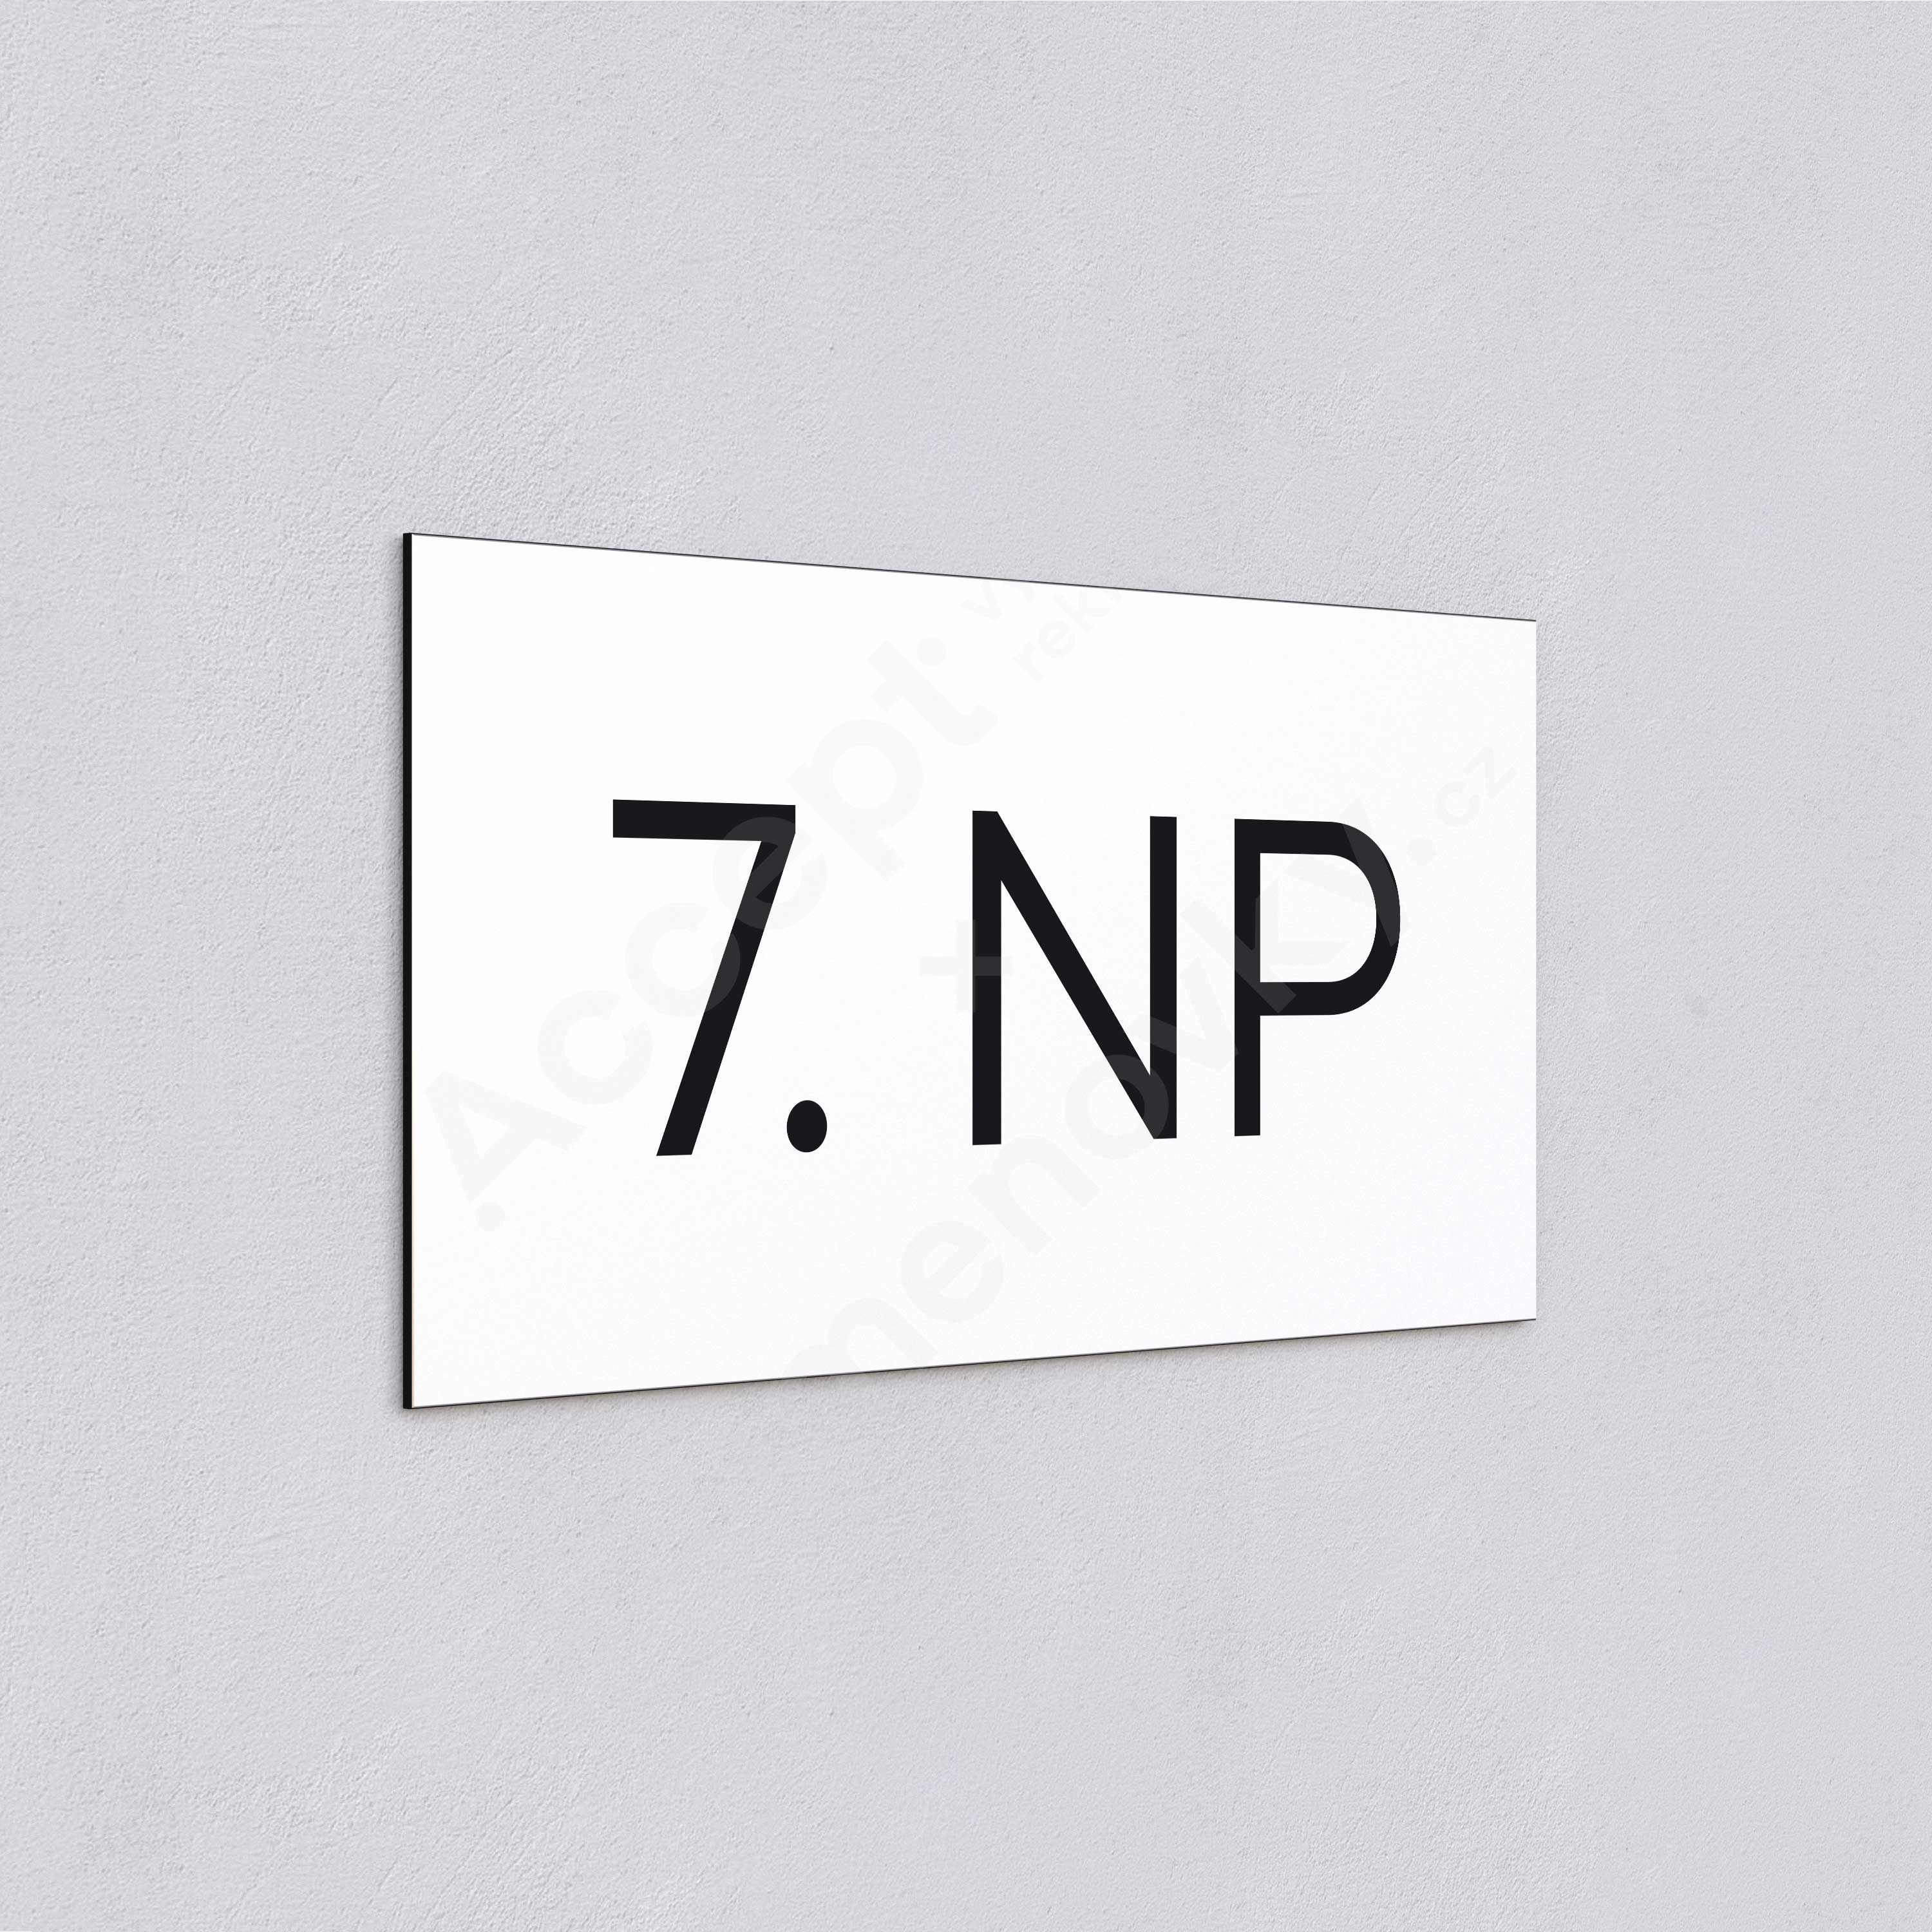 Označení podlaží "7. NP" - bílá tabulka - černý popis